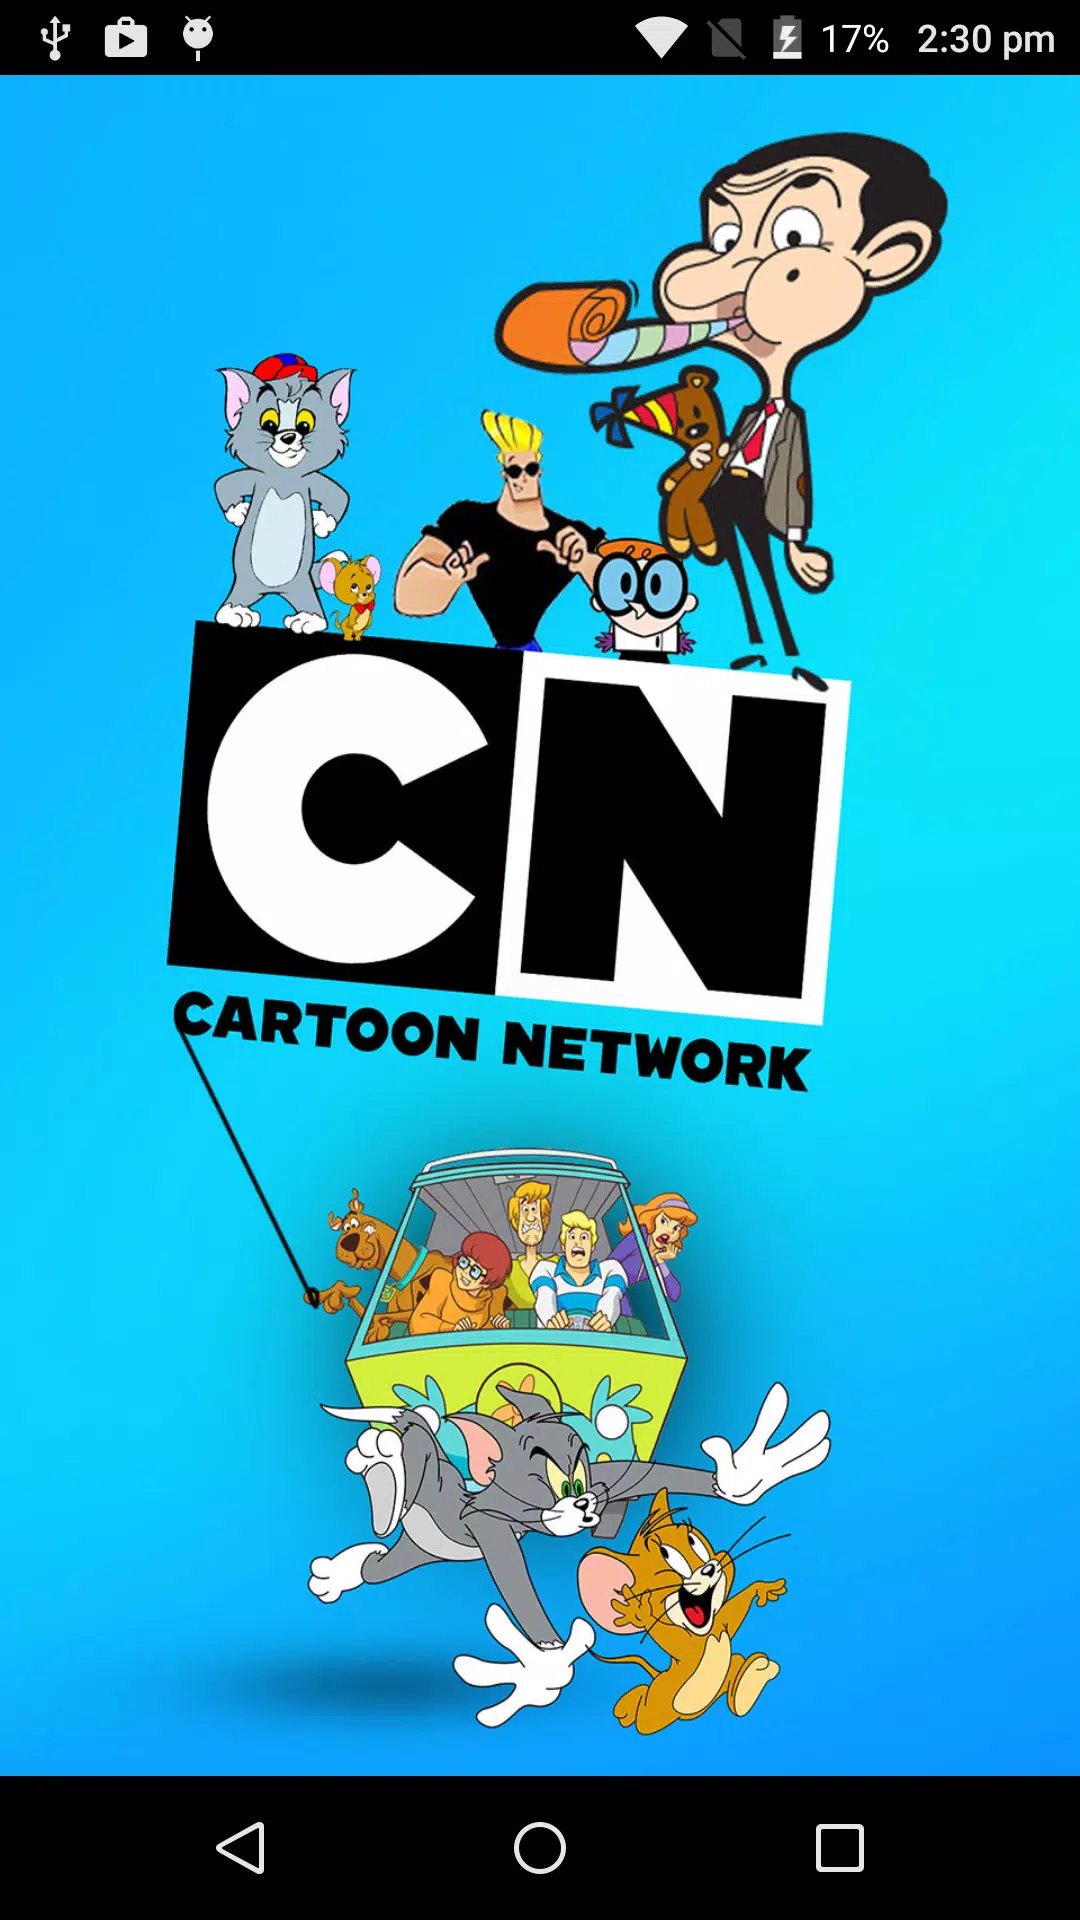 Cartoon Network Pakistan - Want a whole arcade of awesome Regular